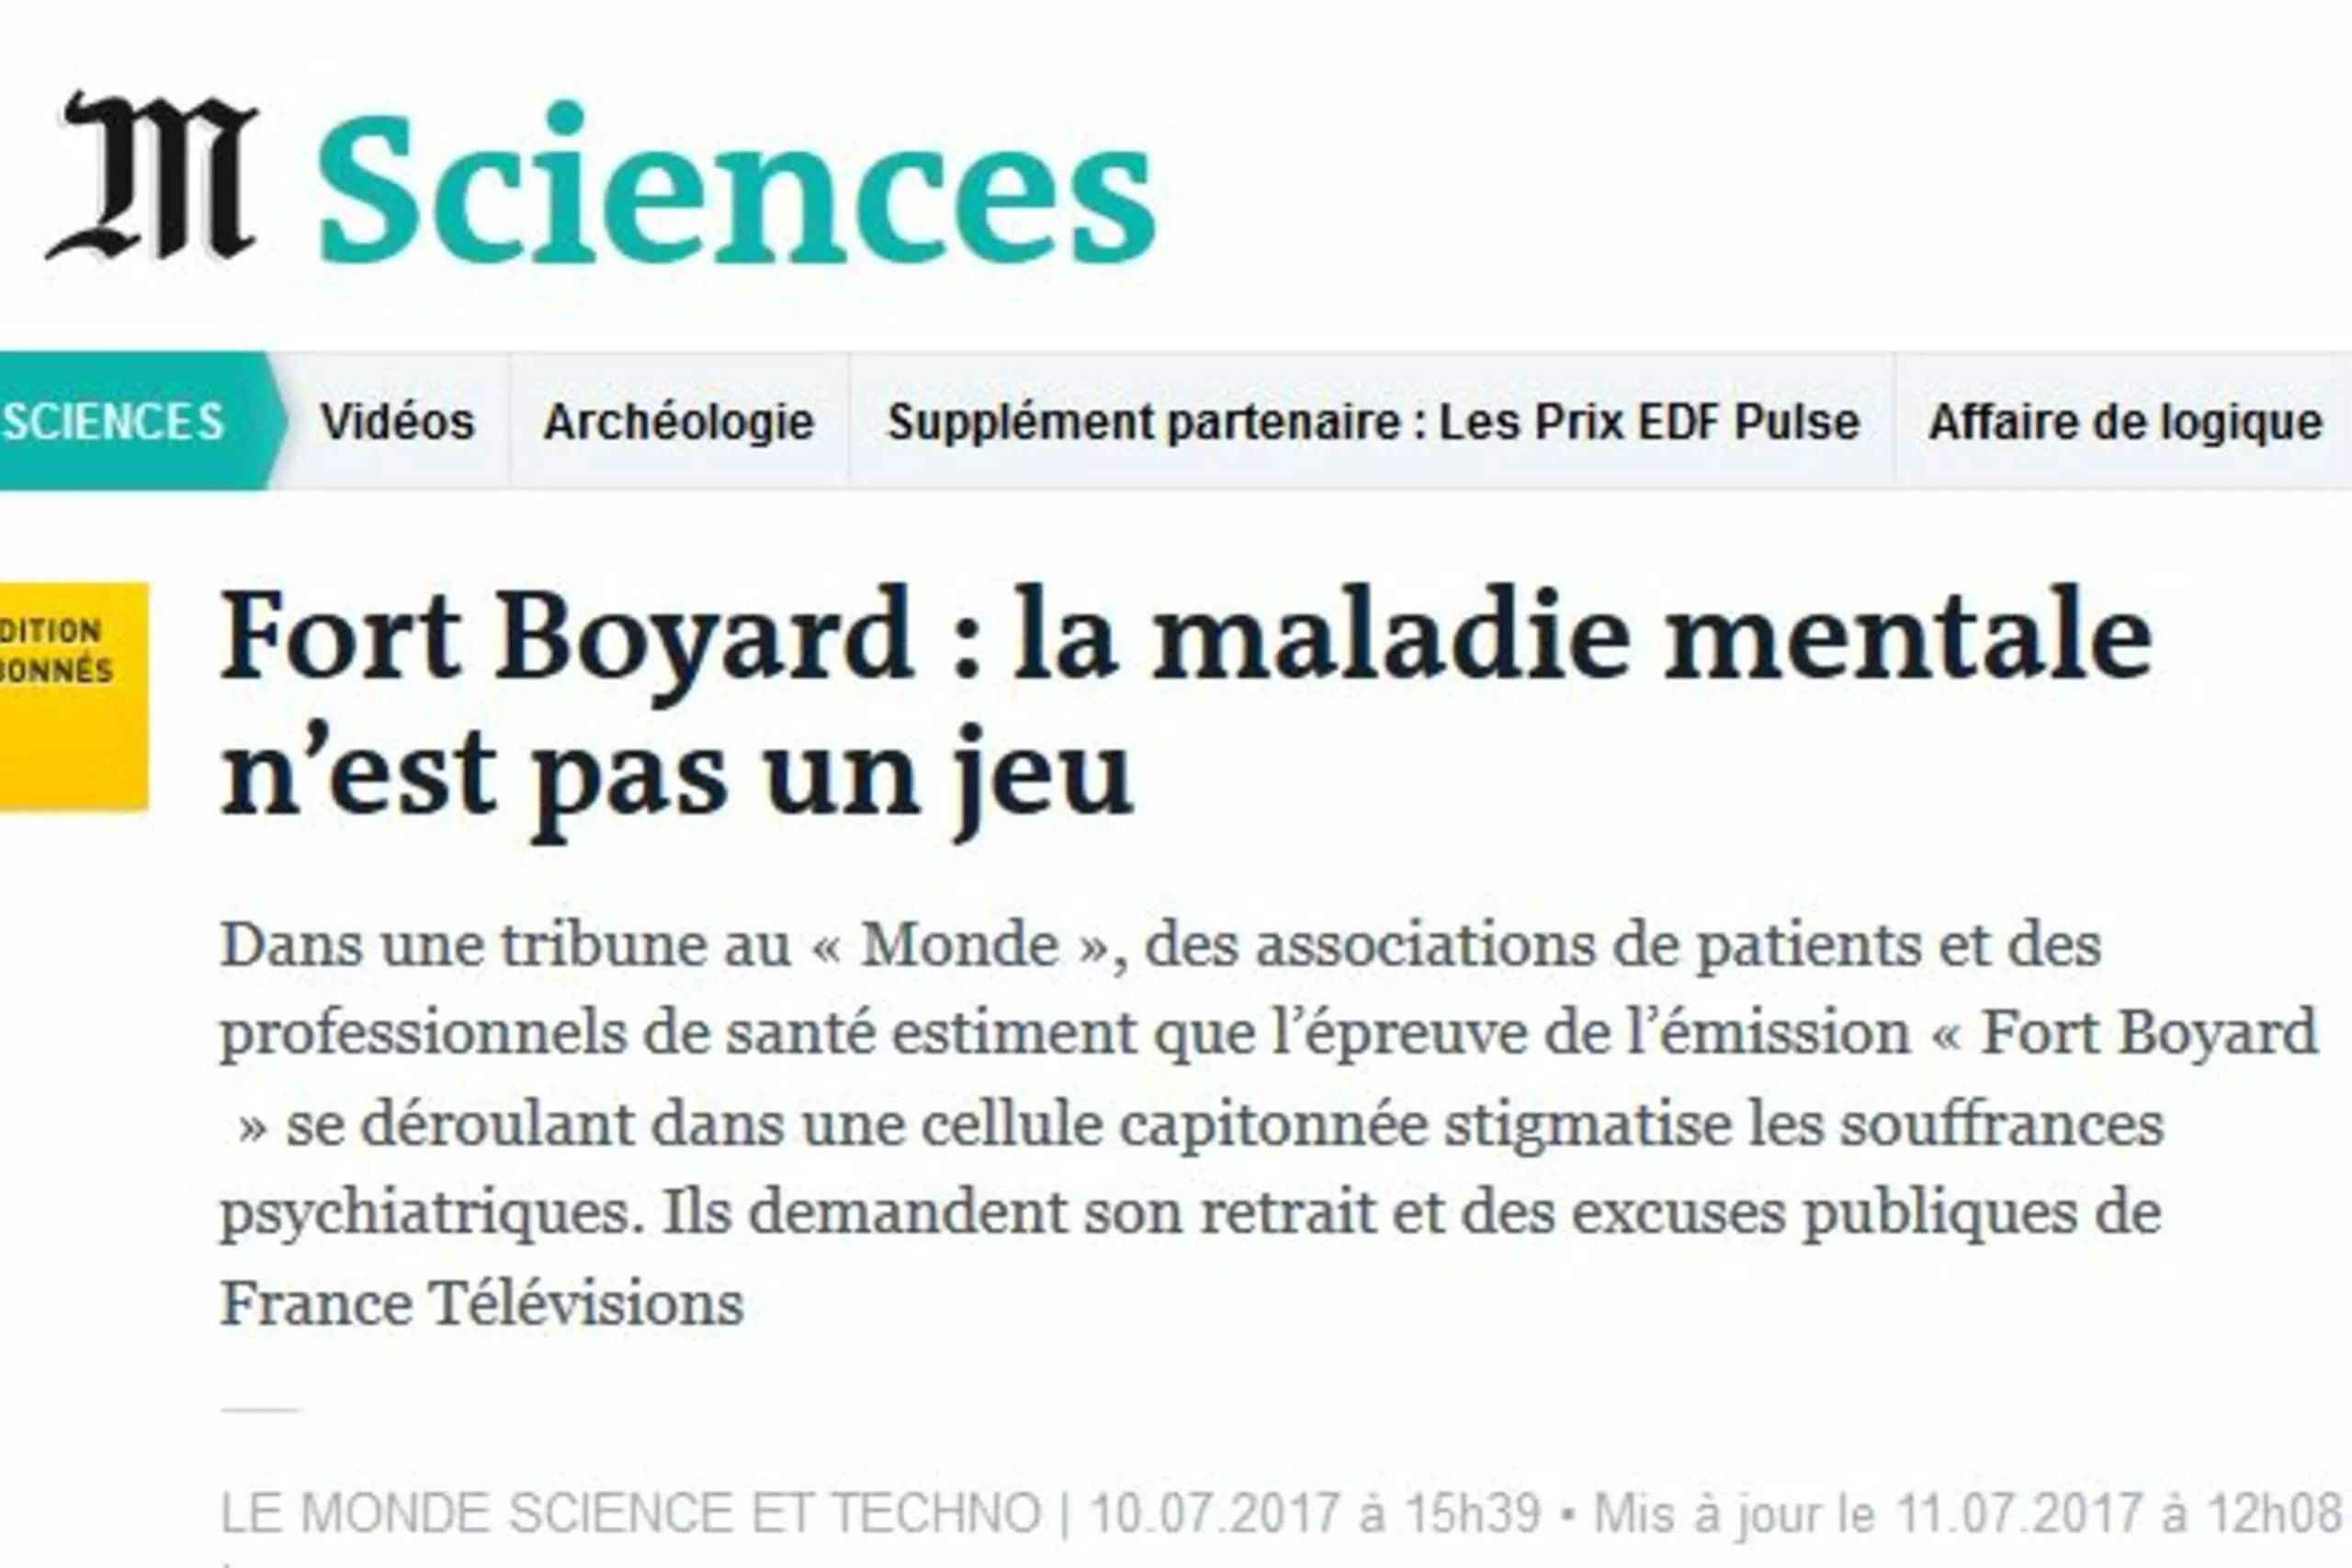 Le Monde Sciences - Fort Boyard : l'indignation !